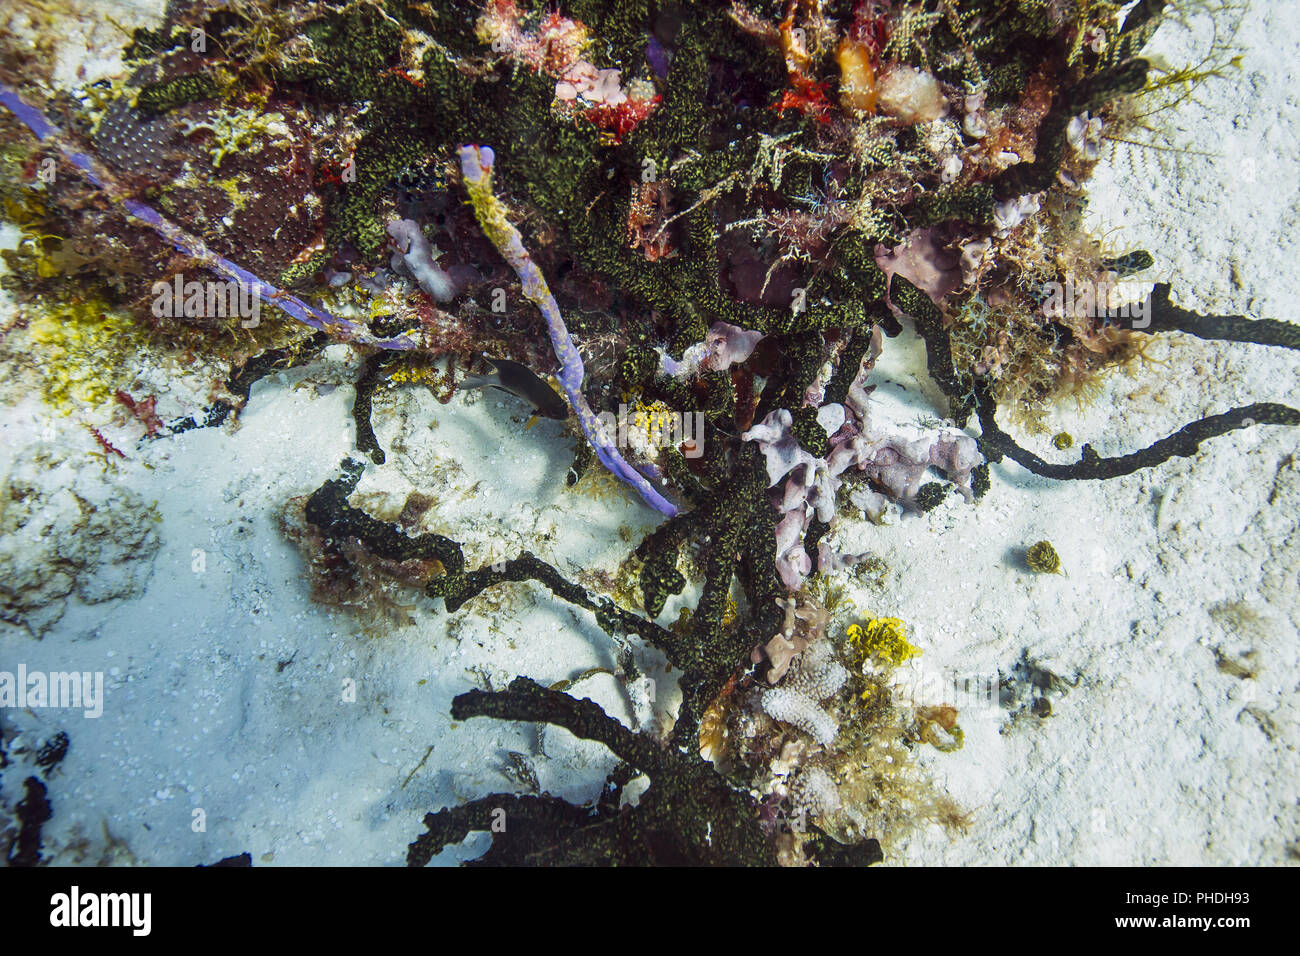 Bicolor damselfish in coral Stock Photo